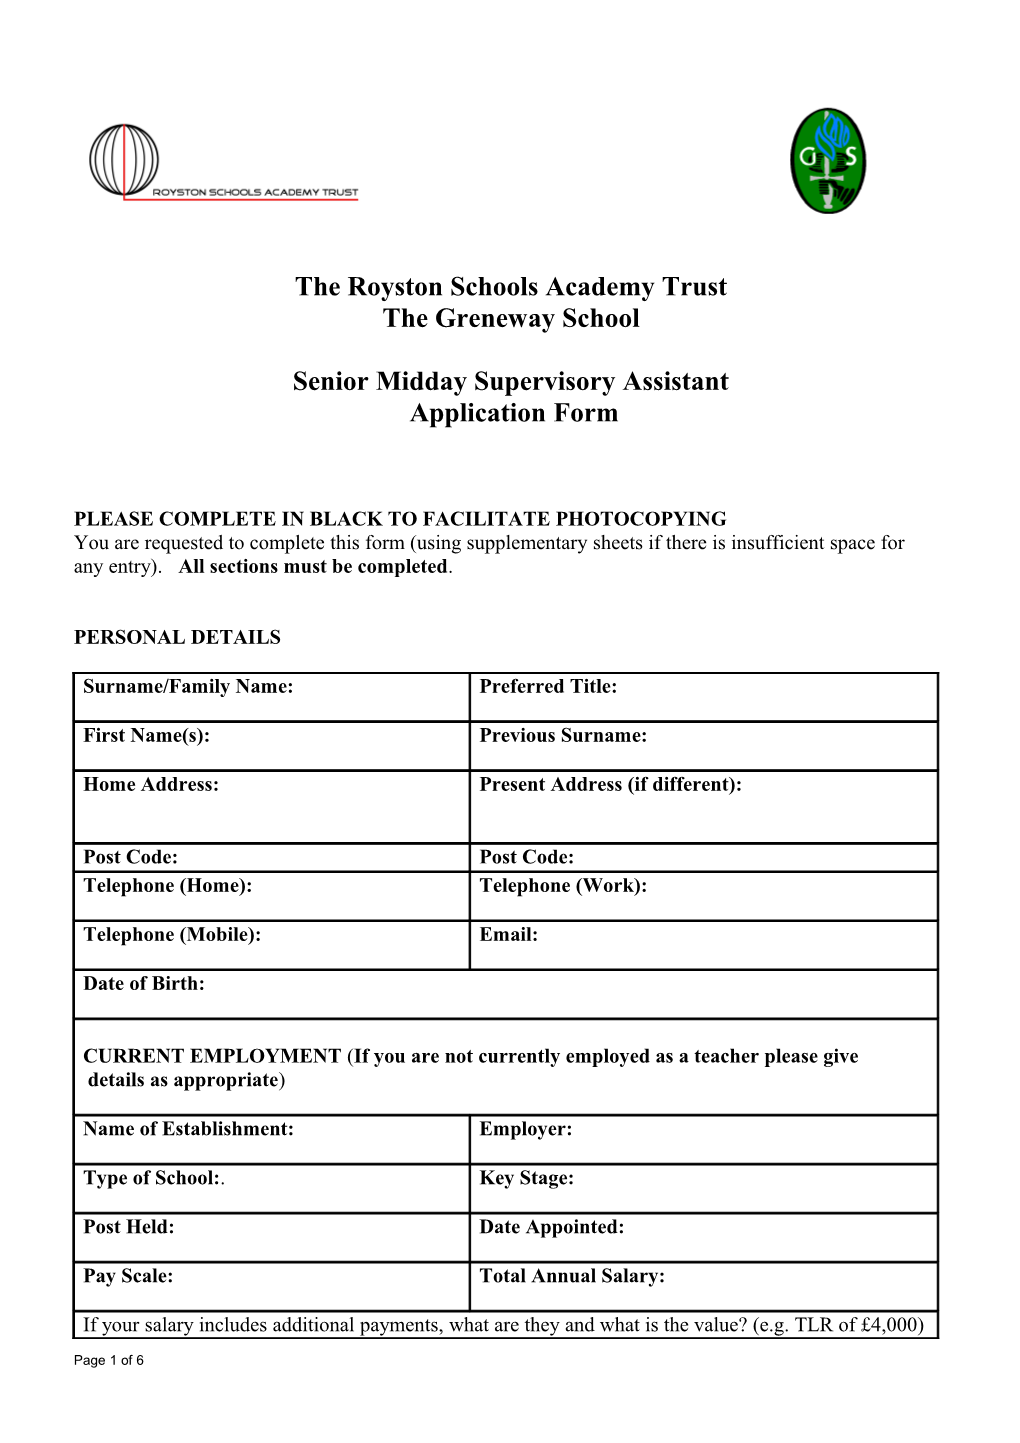 The Royston Schools Academy Trust